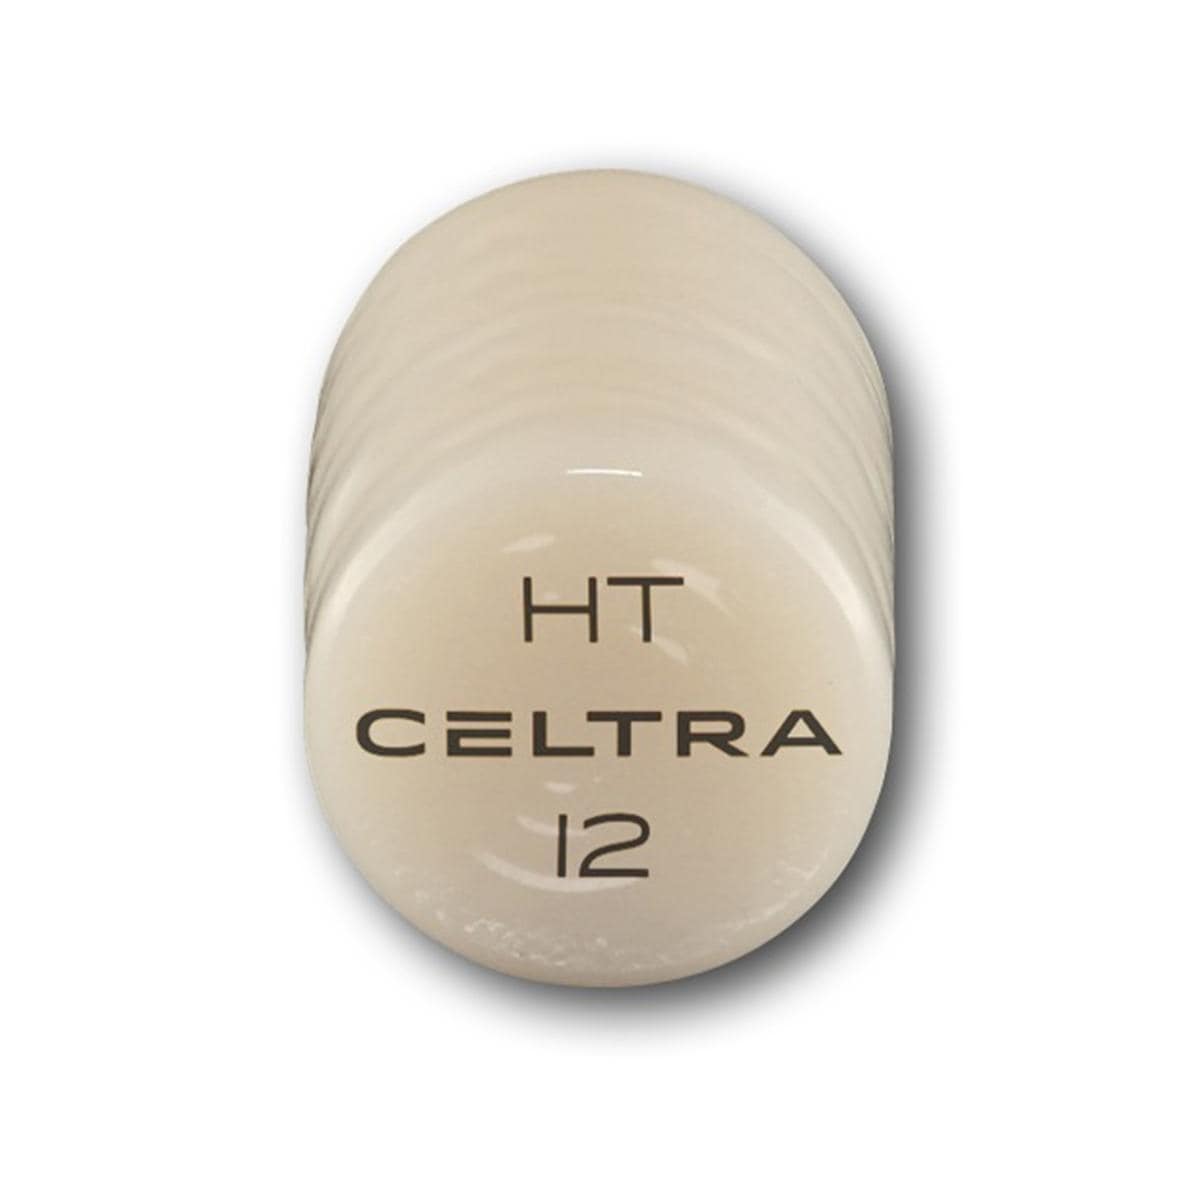 CELTRA® Press HT - I2, Packung 3 x 6 g